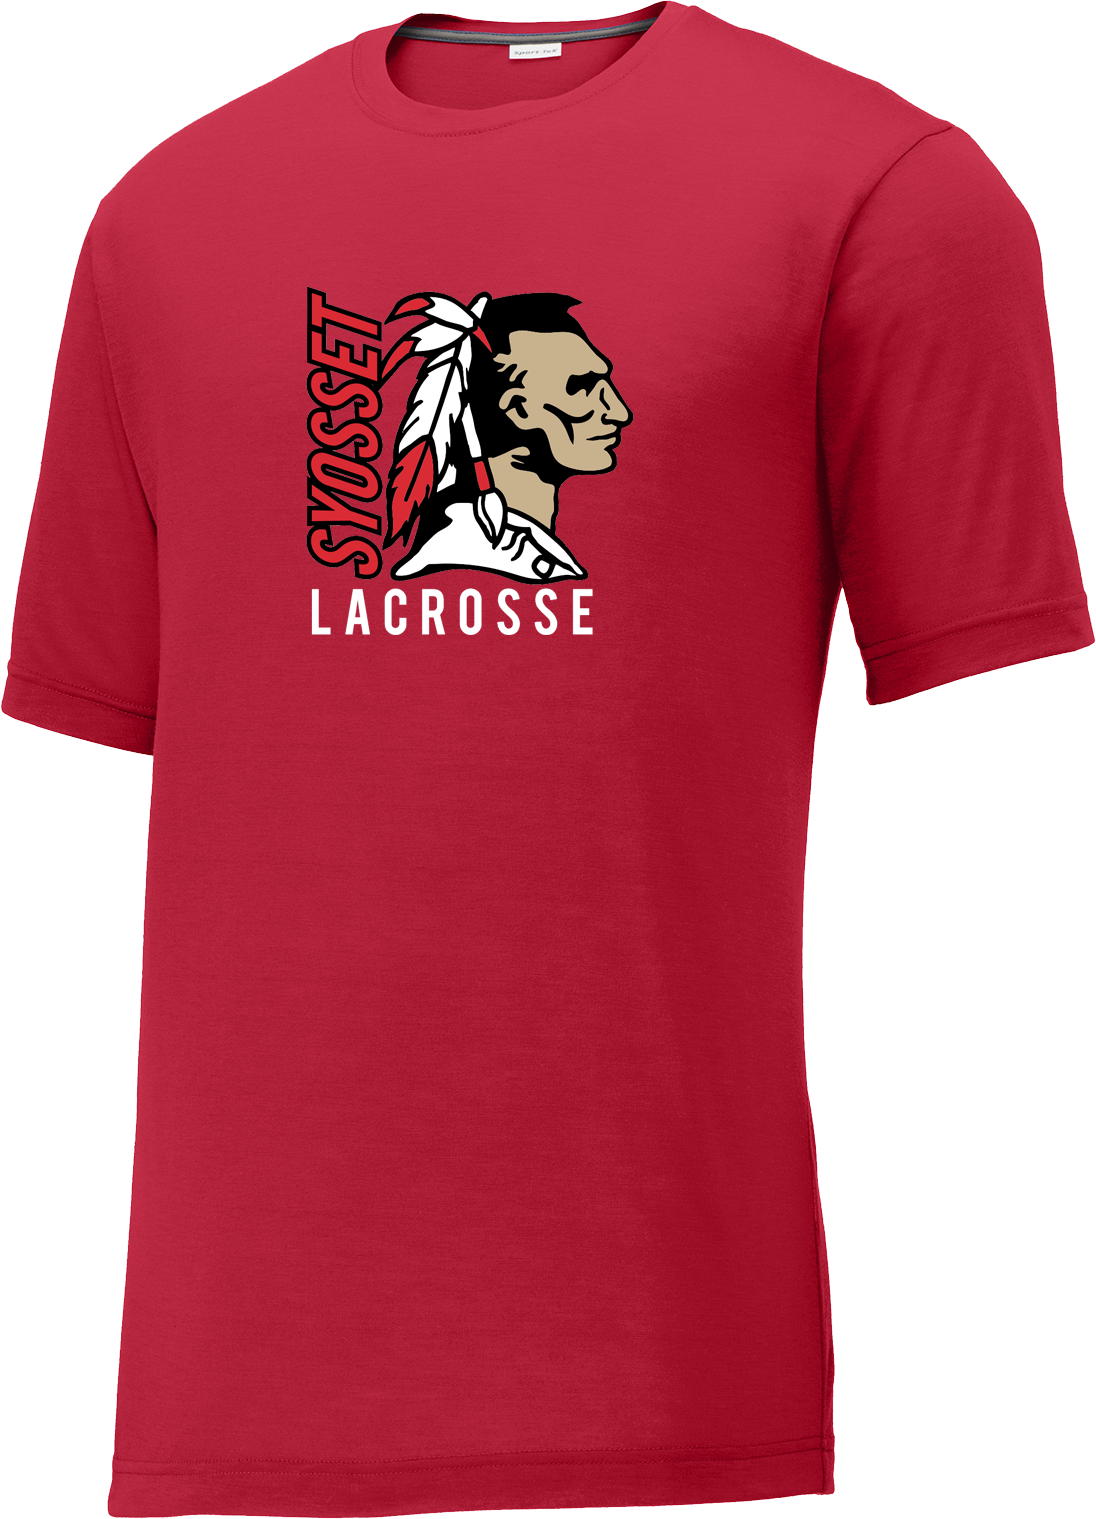 Syosset Lacrosse CottonTouch Performance T-Shirt